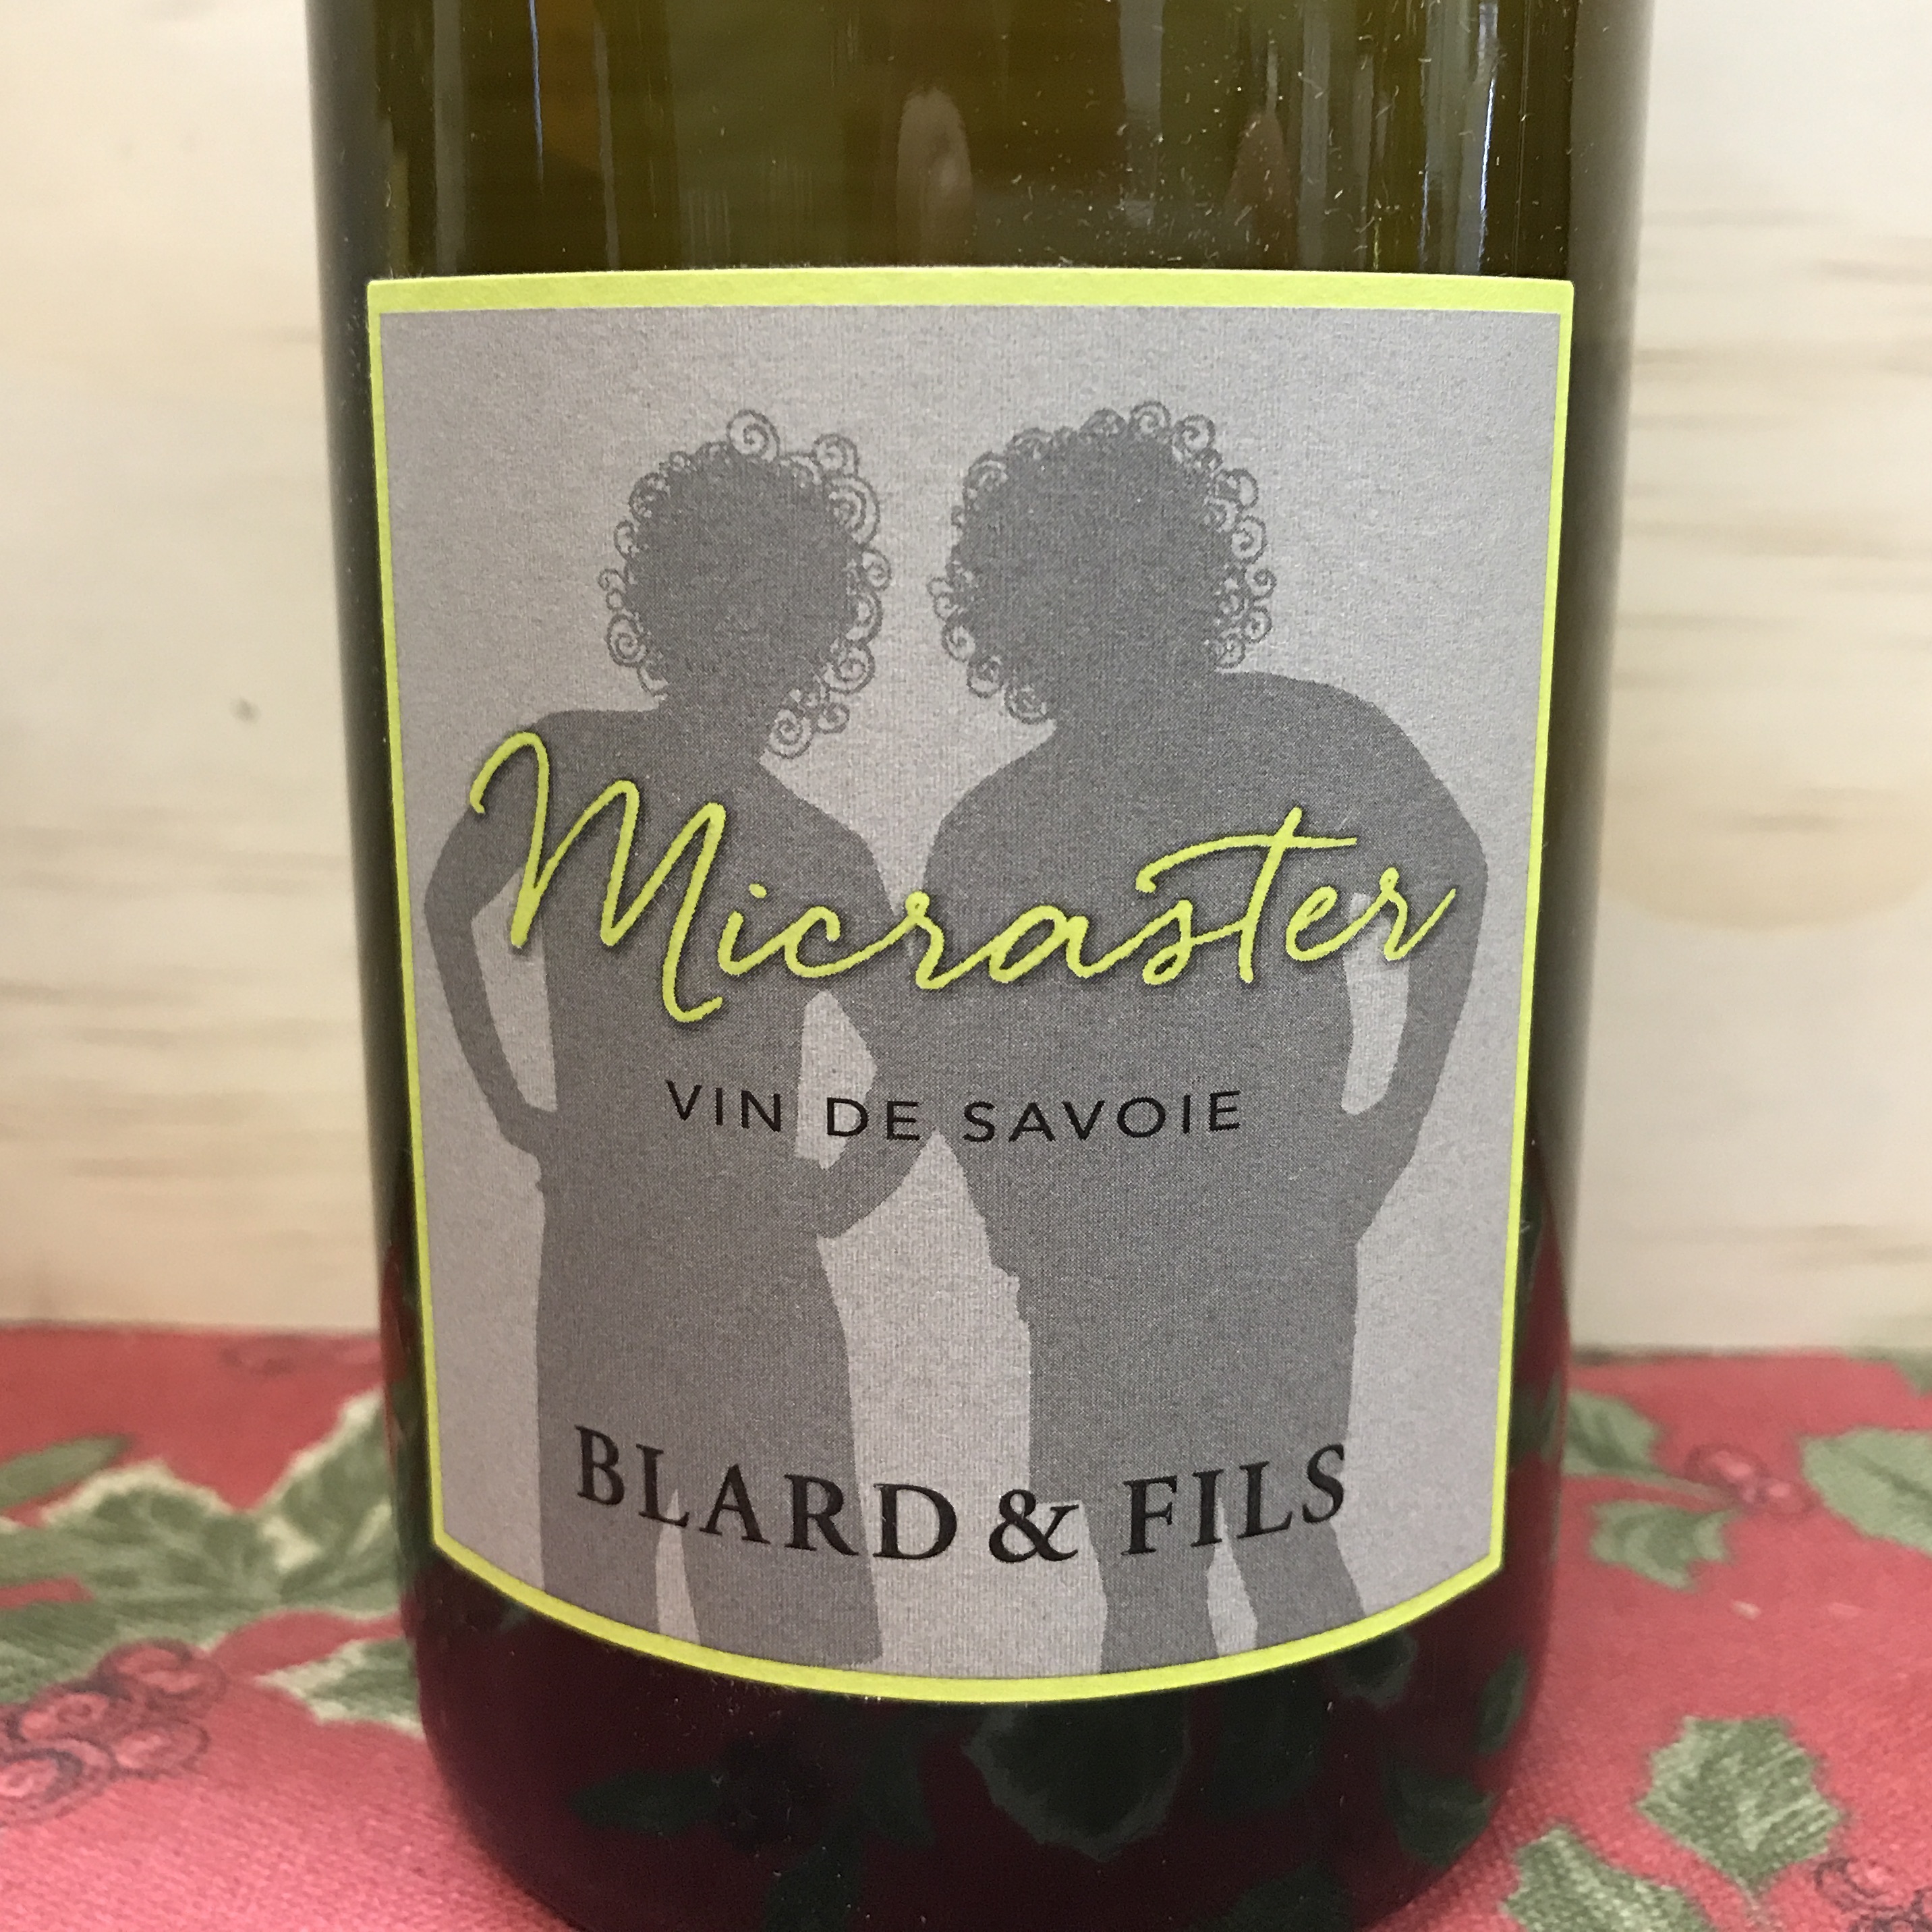 Blard & Fils Micraster Vin de Savoie Abymes white